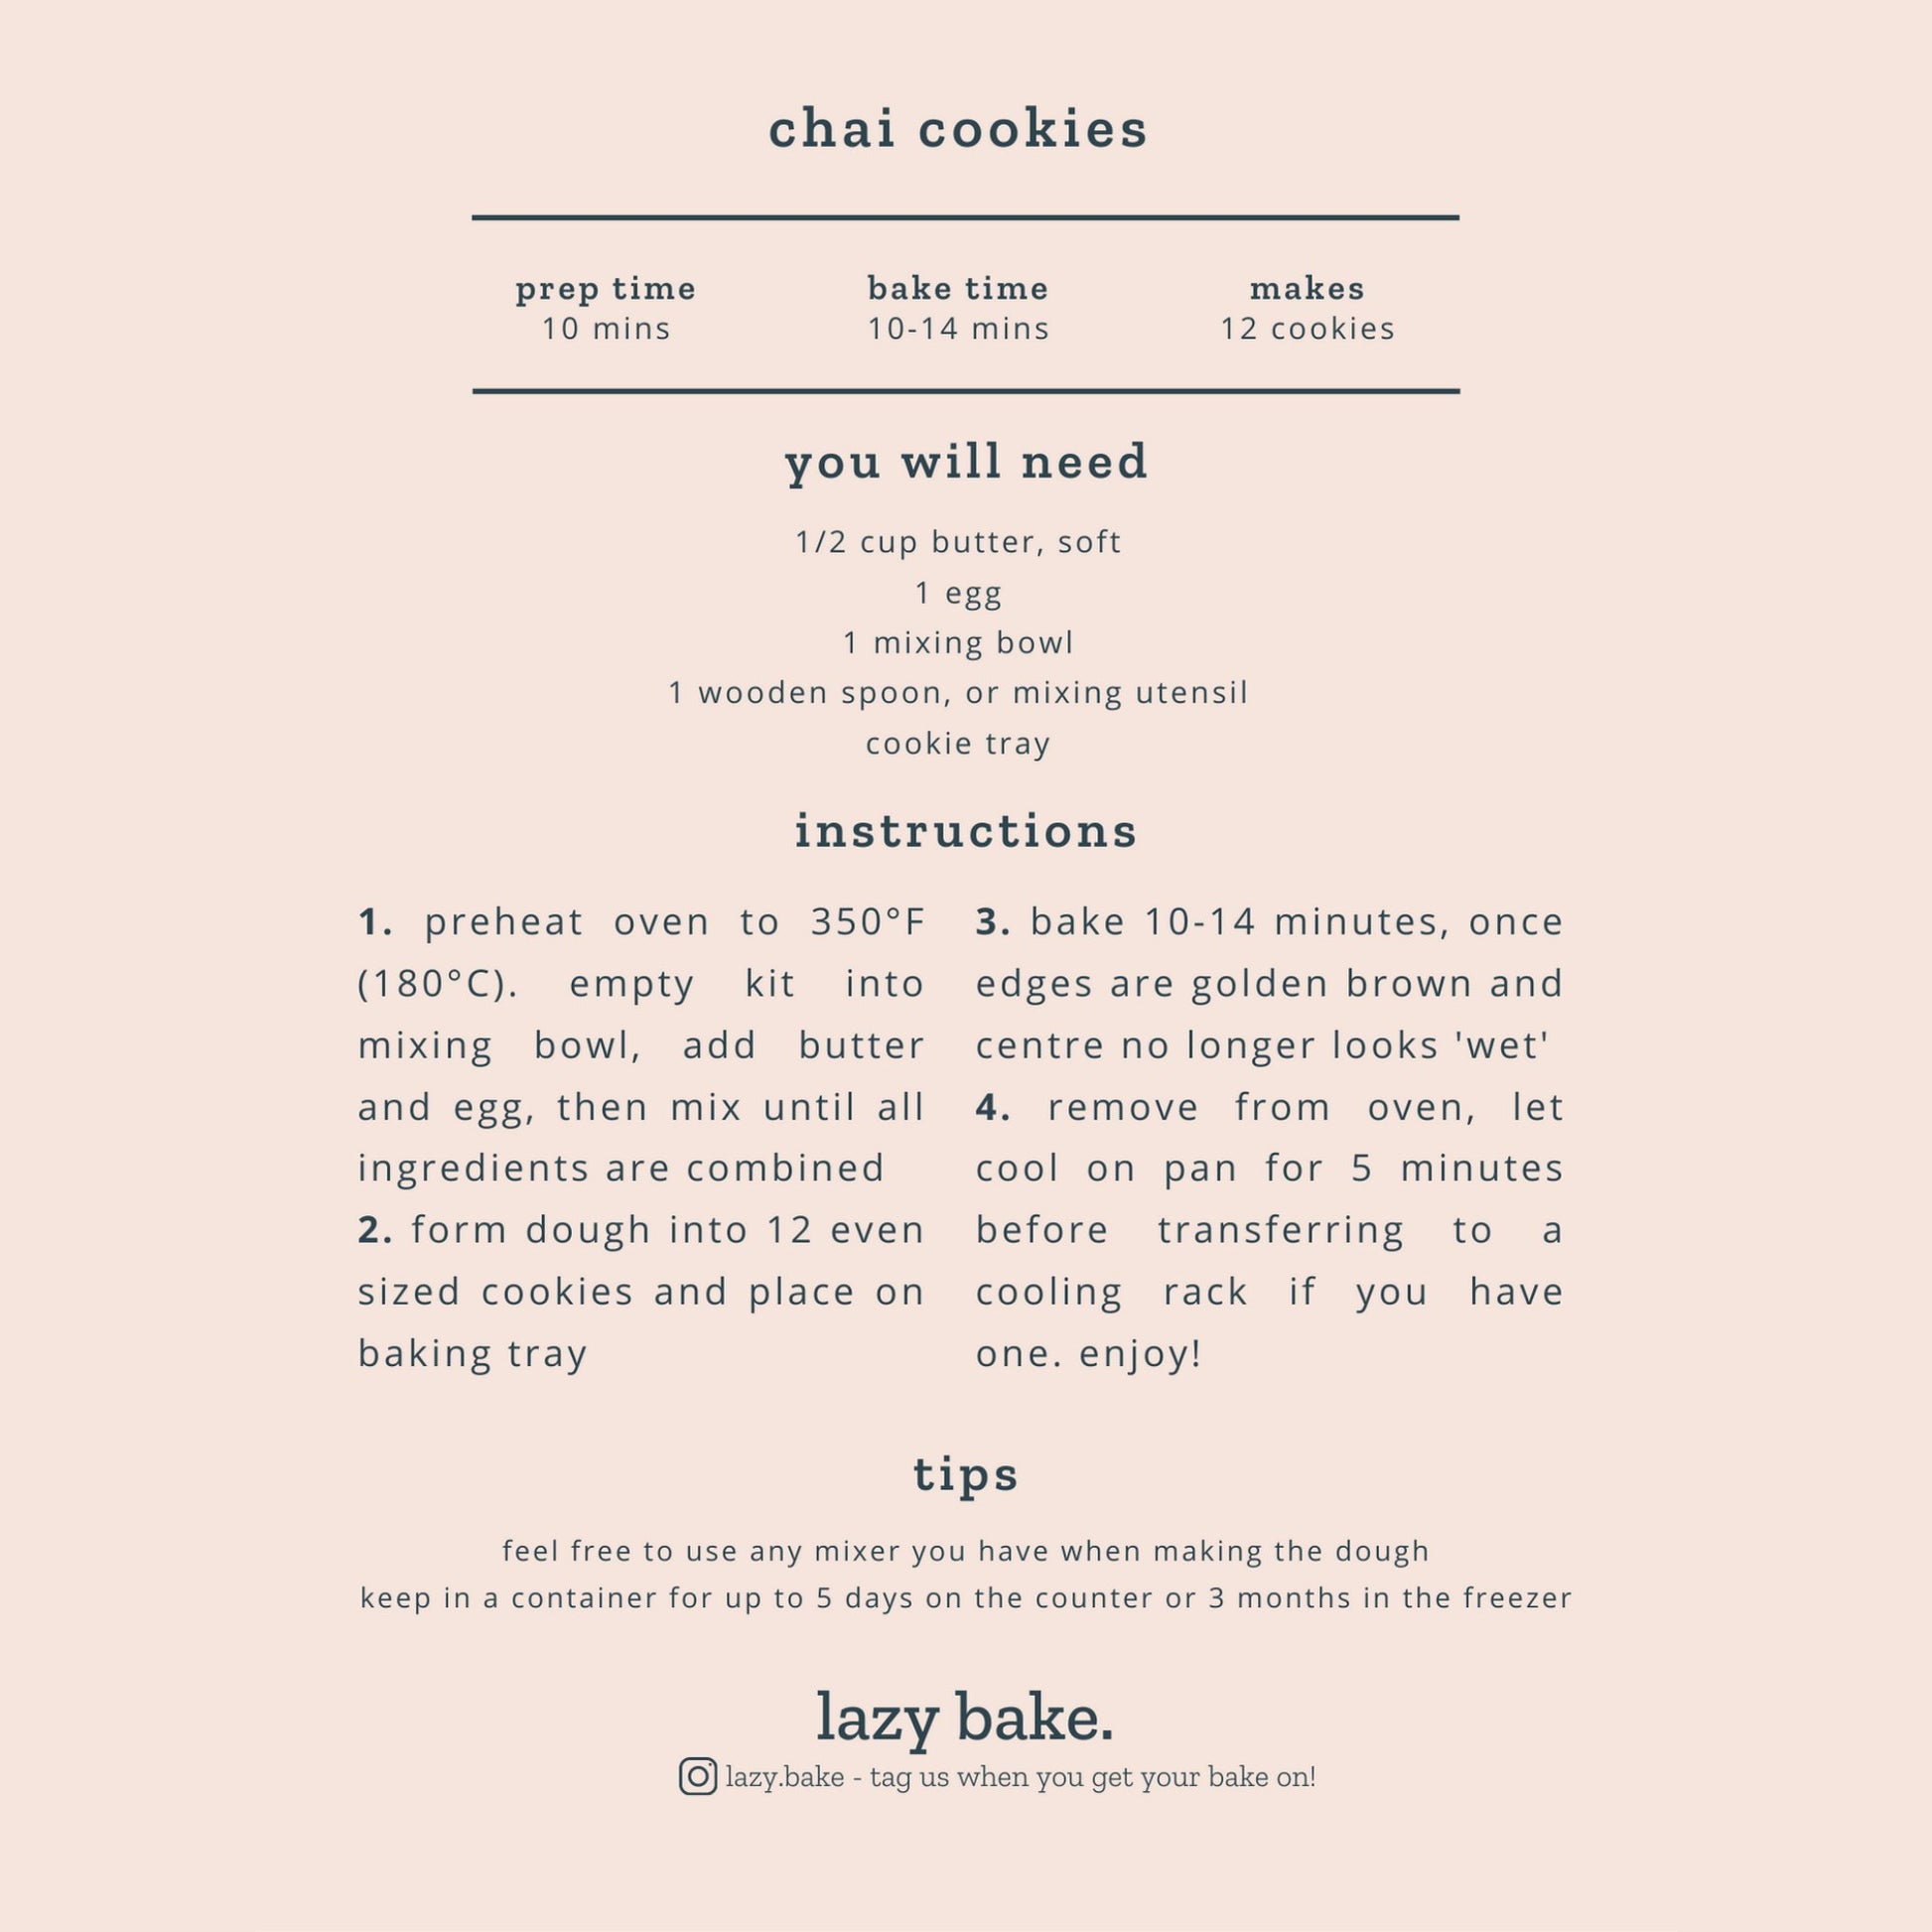 Chai Cookies - Lazy Bake